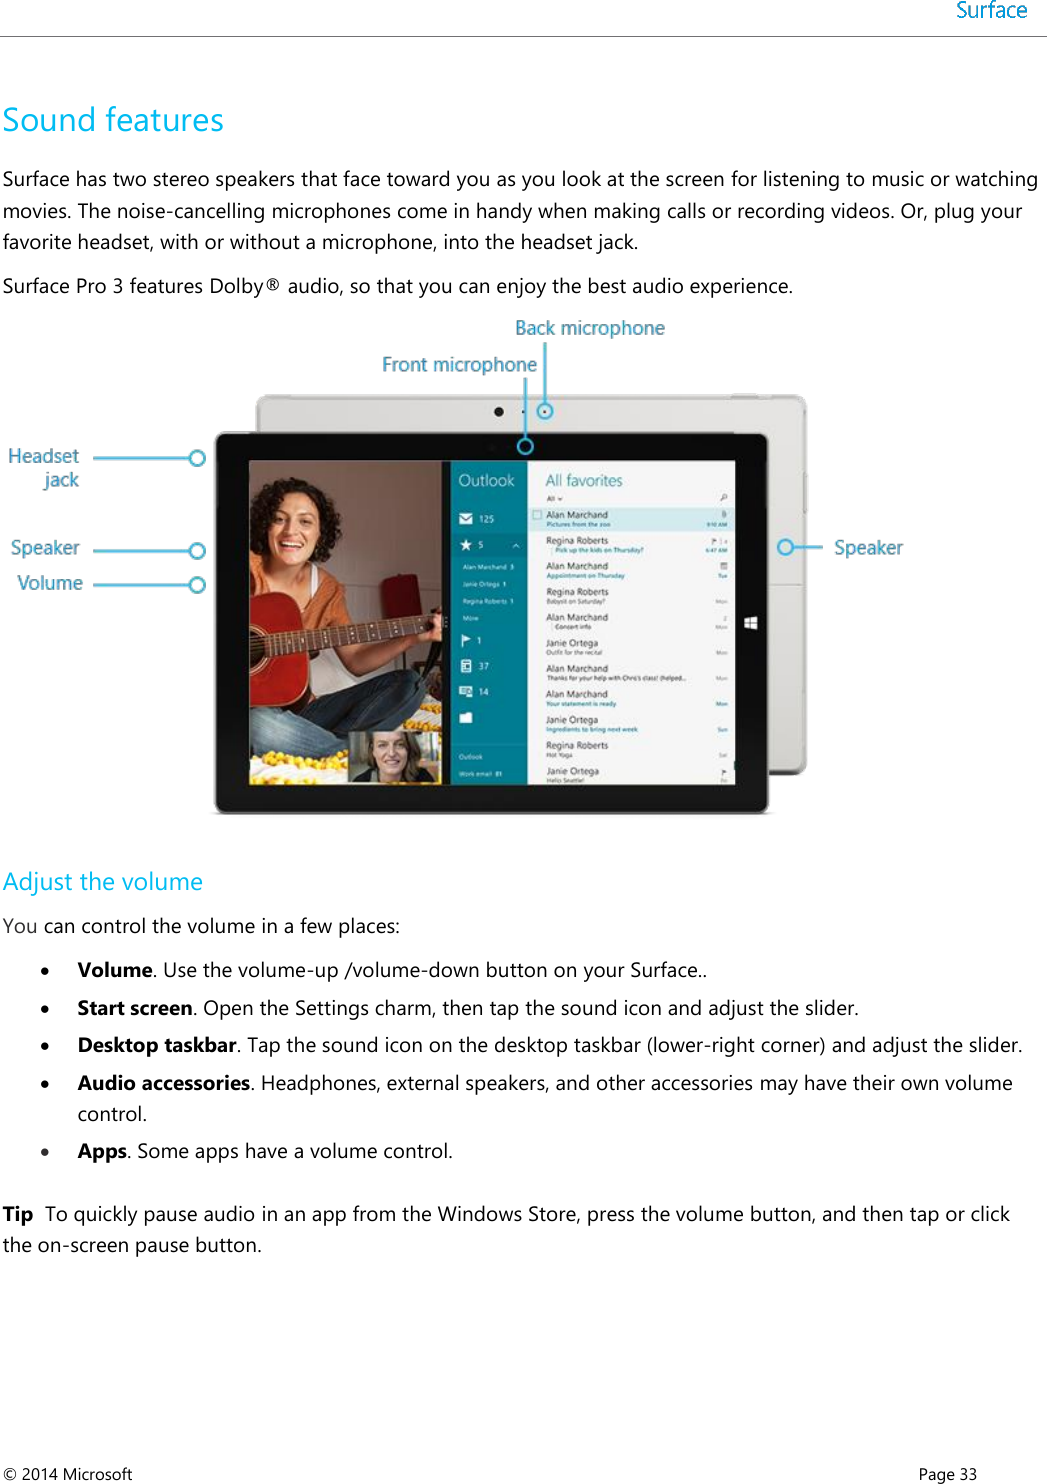 Microsoft Surface Pro 5 User Manual